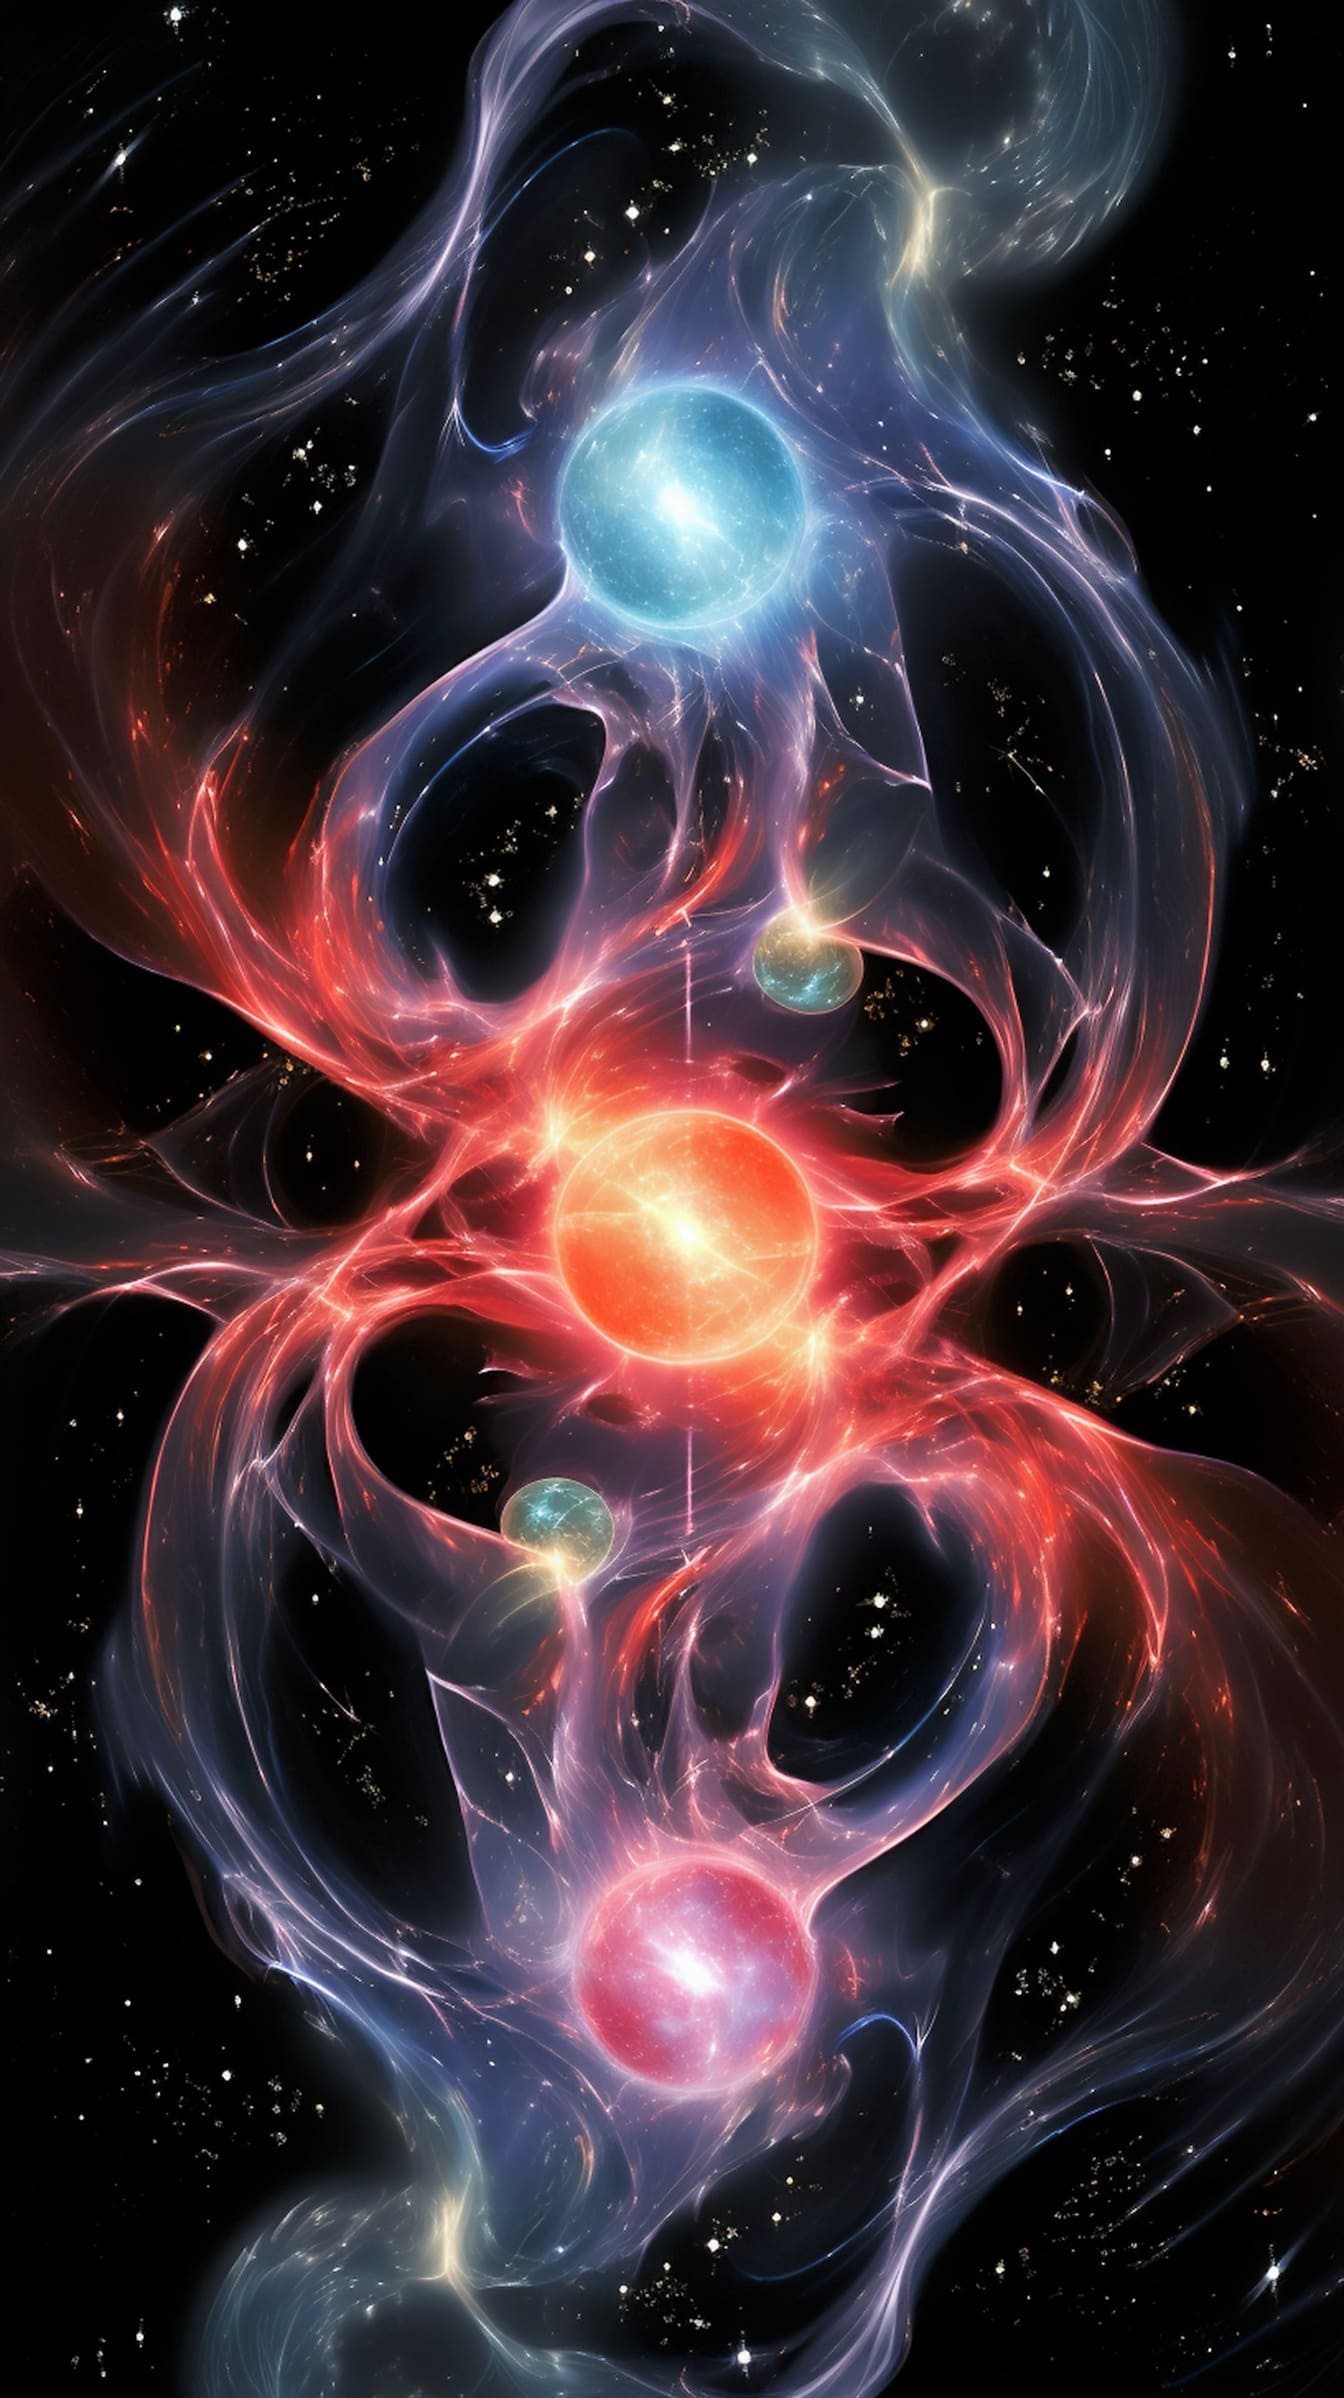 Ilustrasi energi dinamis alam semesta plasma yang megah